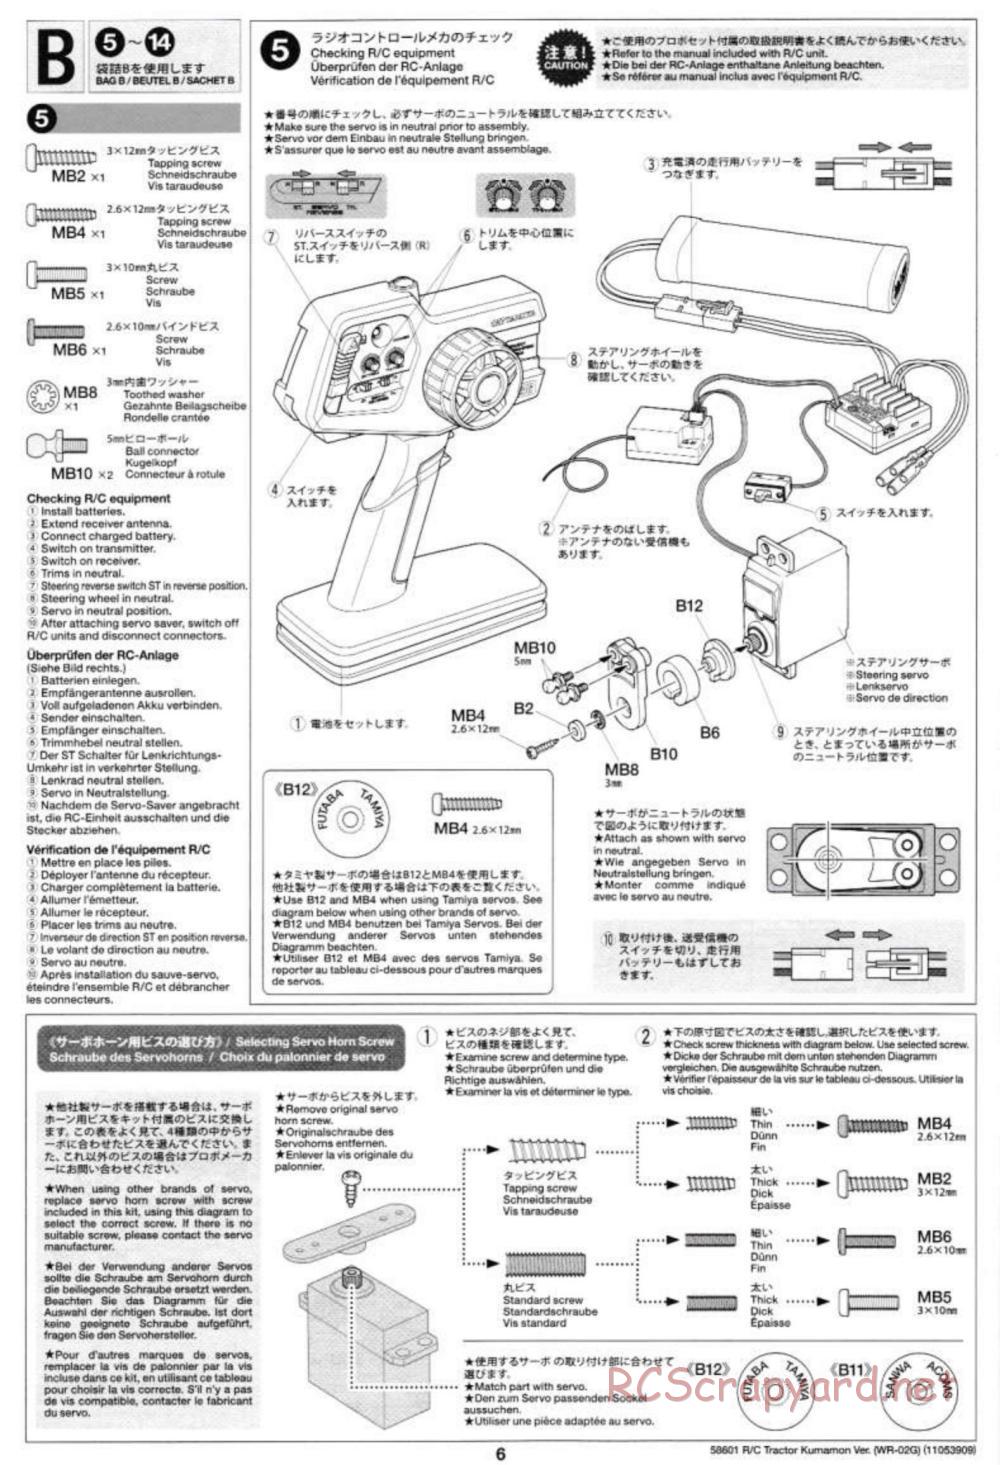 Tamiya - Tractor Kumamon Version Chassis - Manual - Page 6